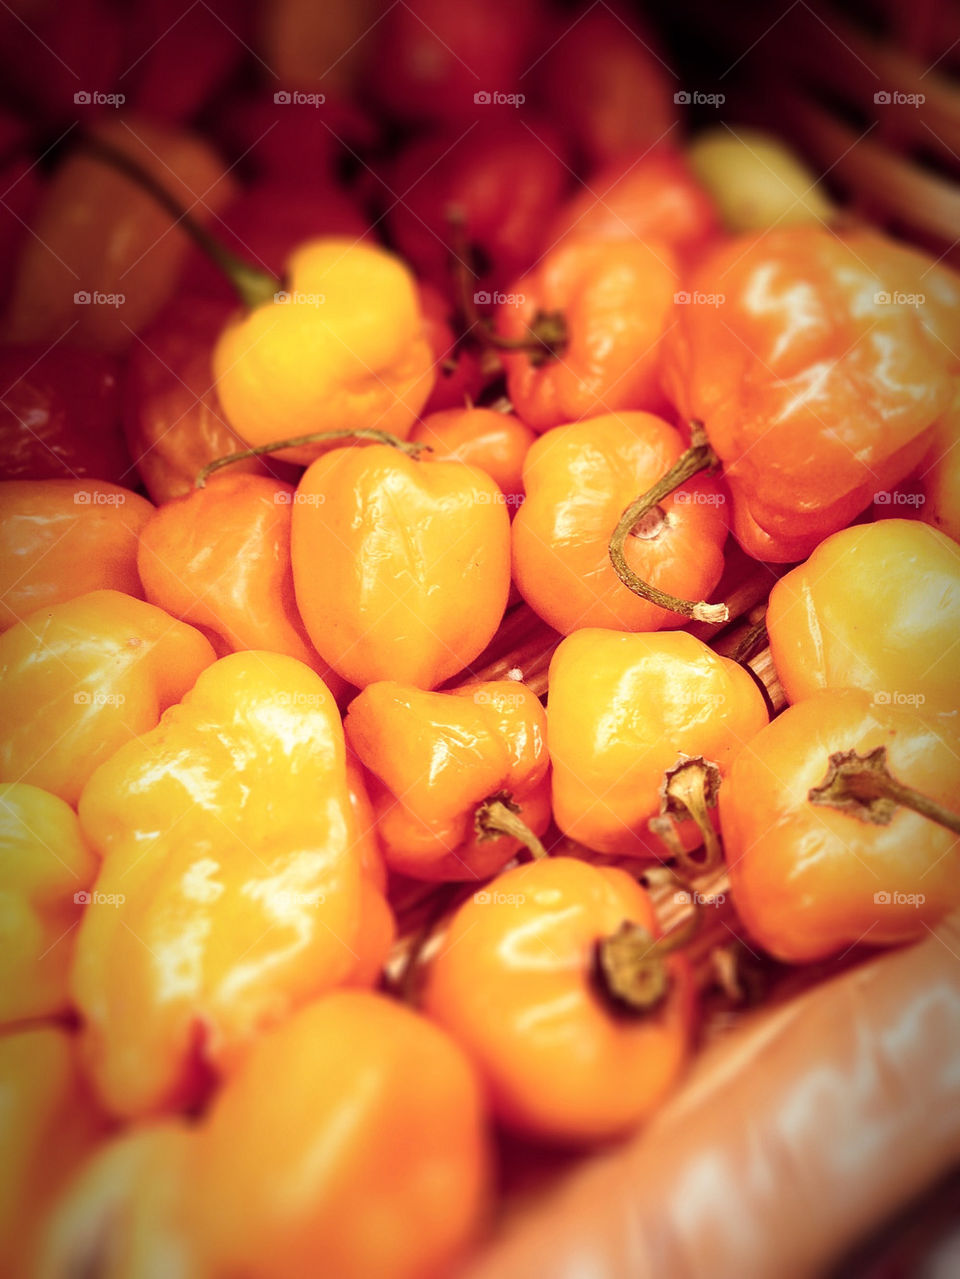 food orange peppers raw by bsa